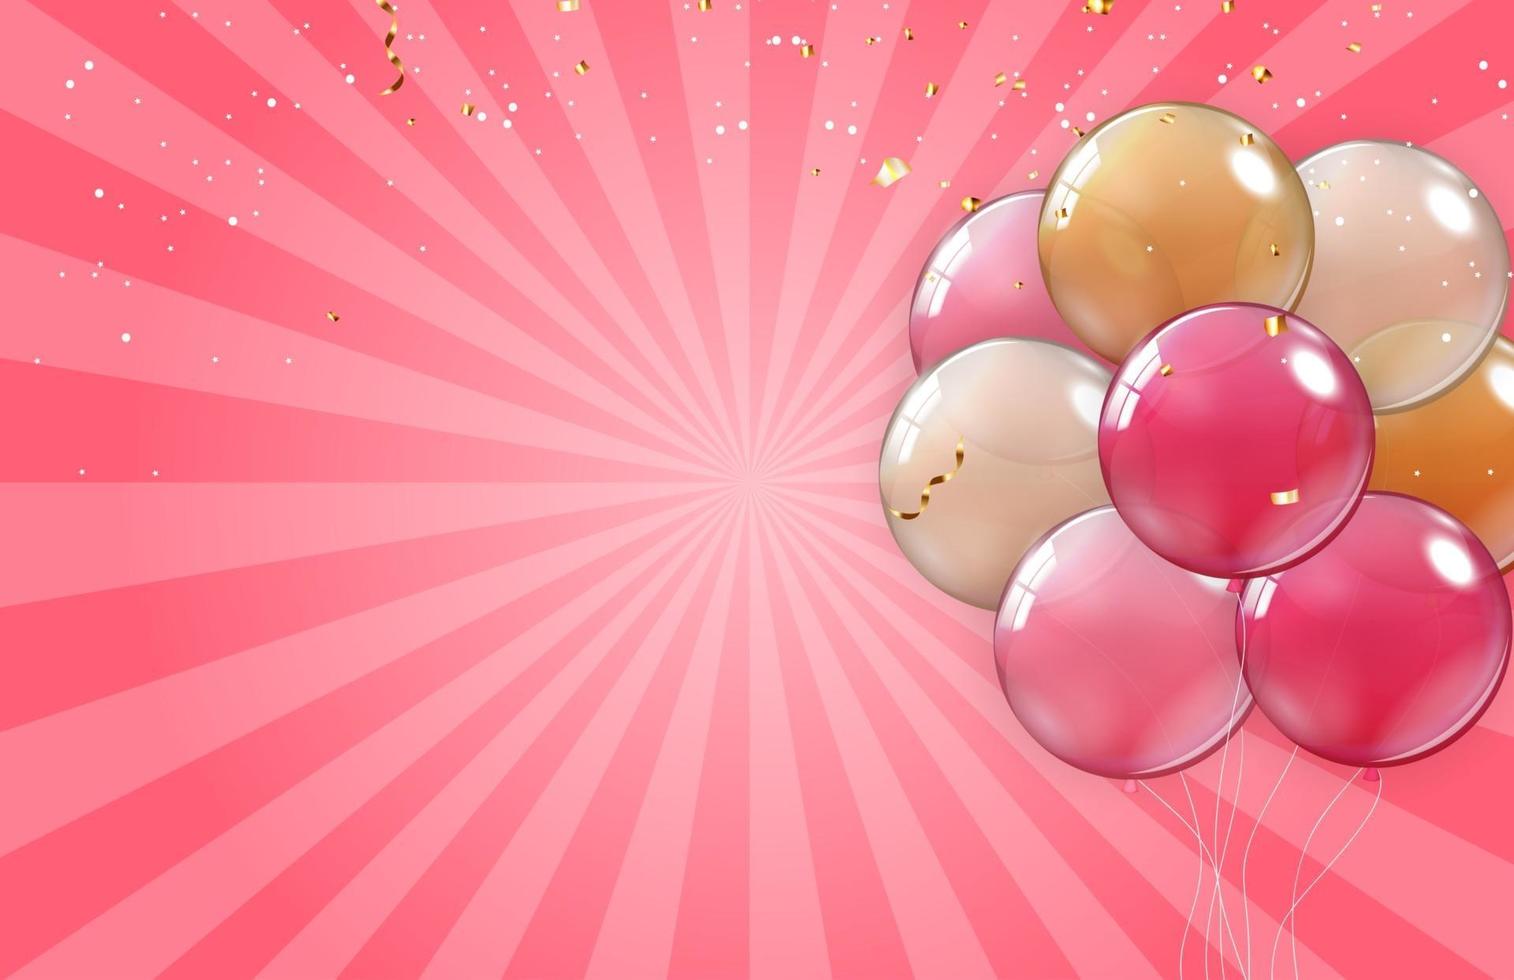 farbige Luftballons und Konfetti-Vektorillustration auf rosa vektor